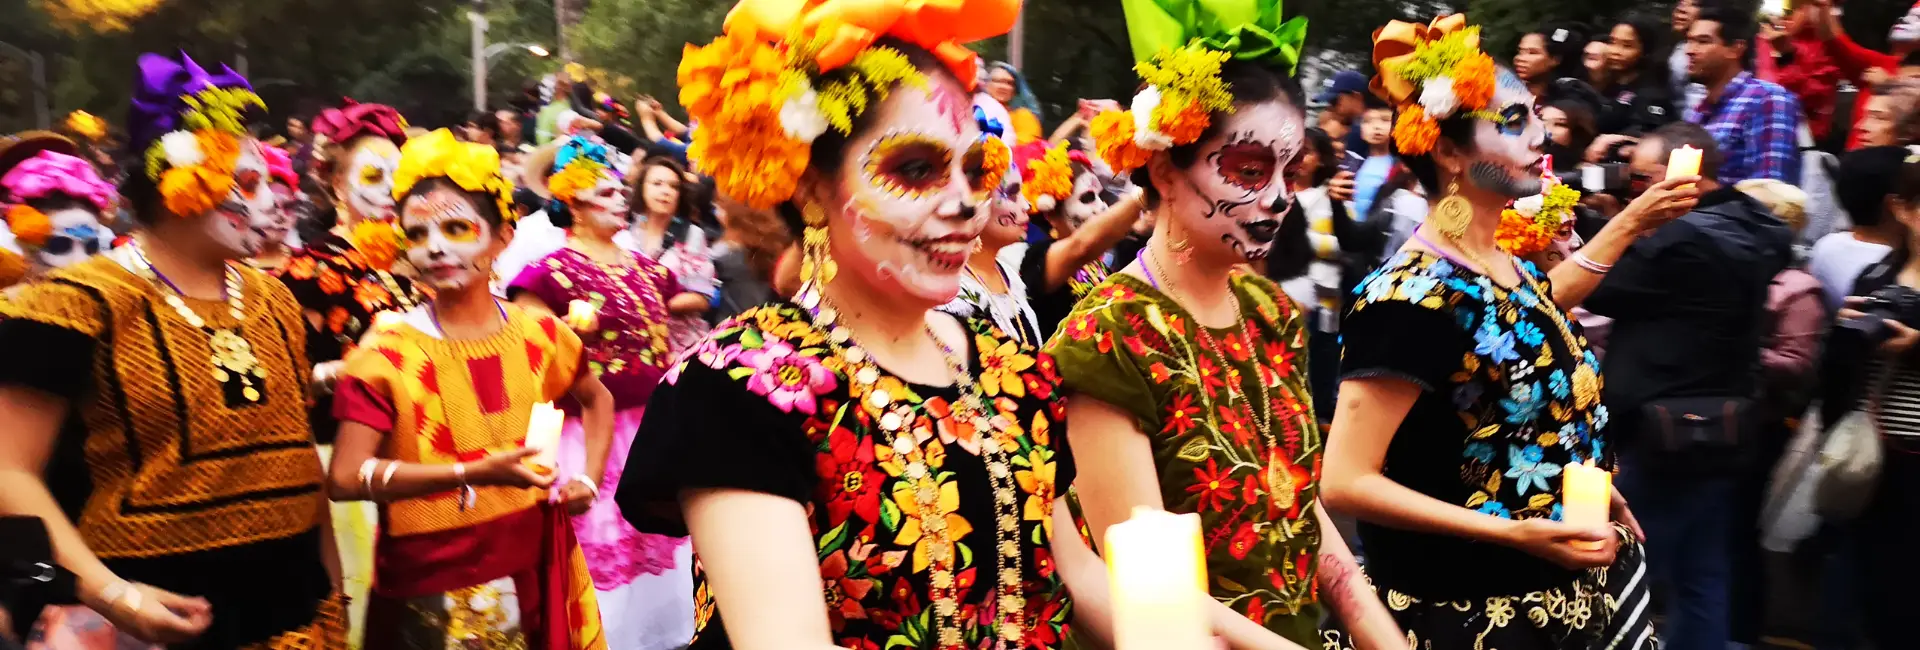 Revelion în Mexico City & Incursiune în Mexicul Colonial